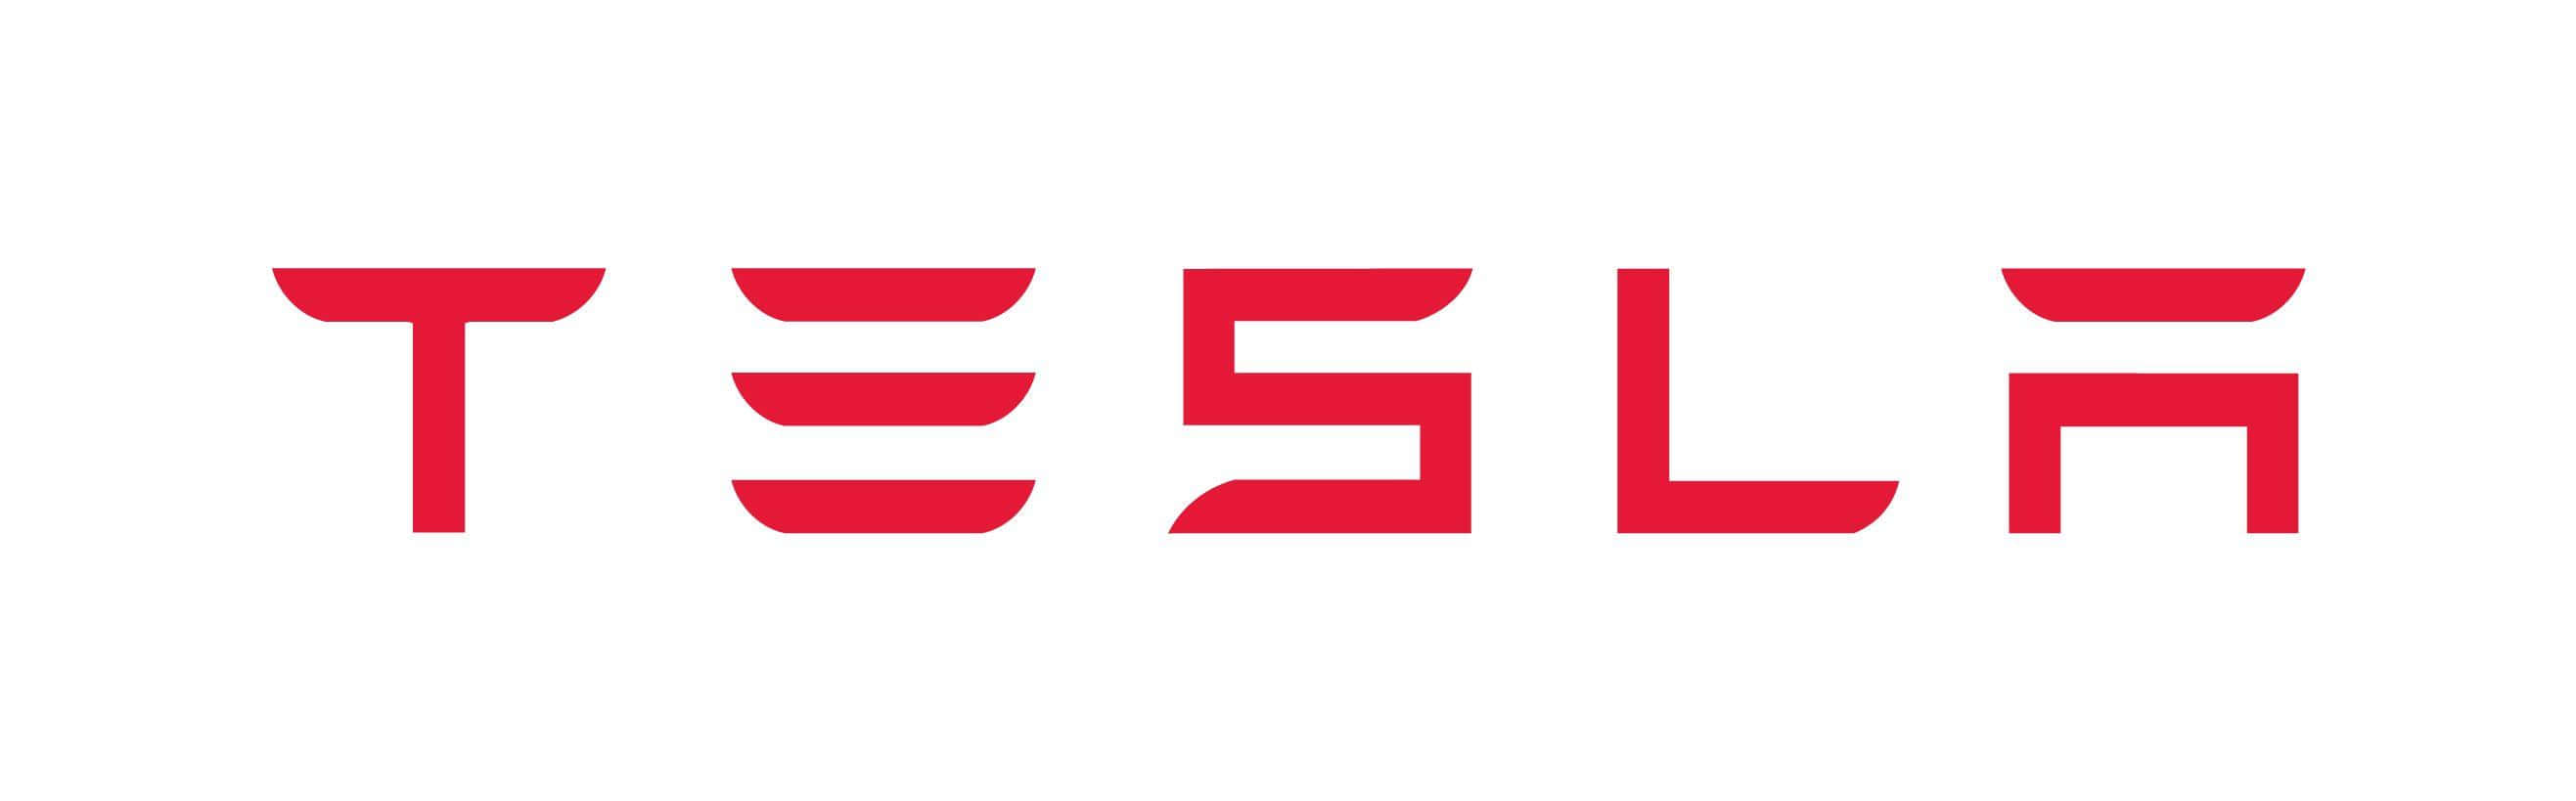 Tesla Logo On A White Background Wallpaper